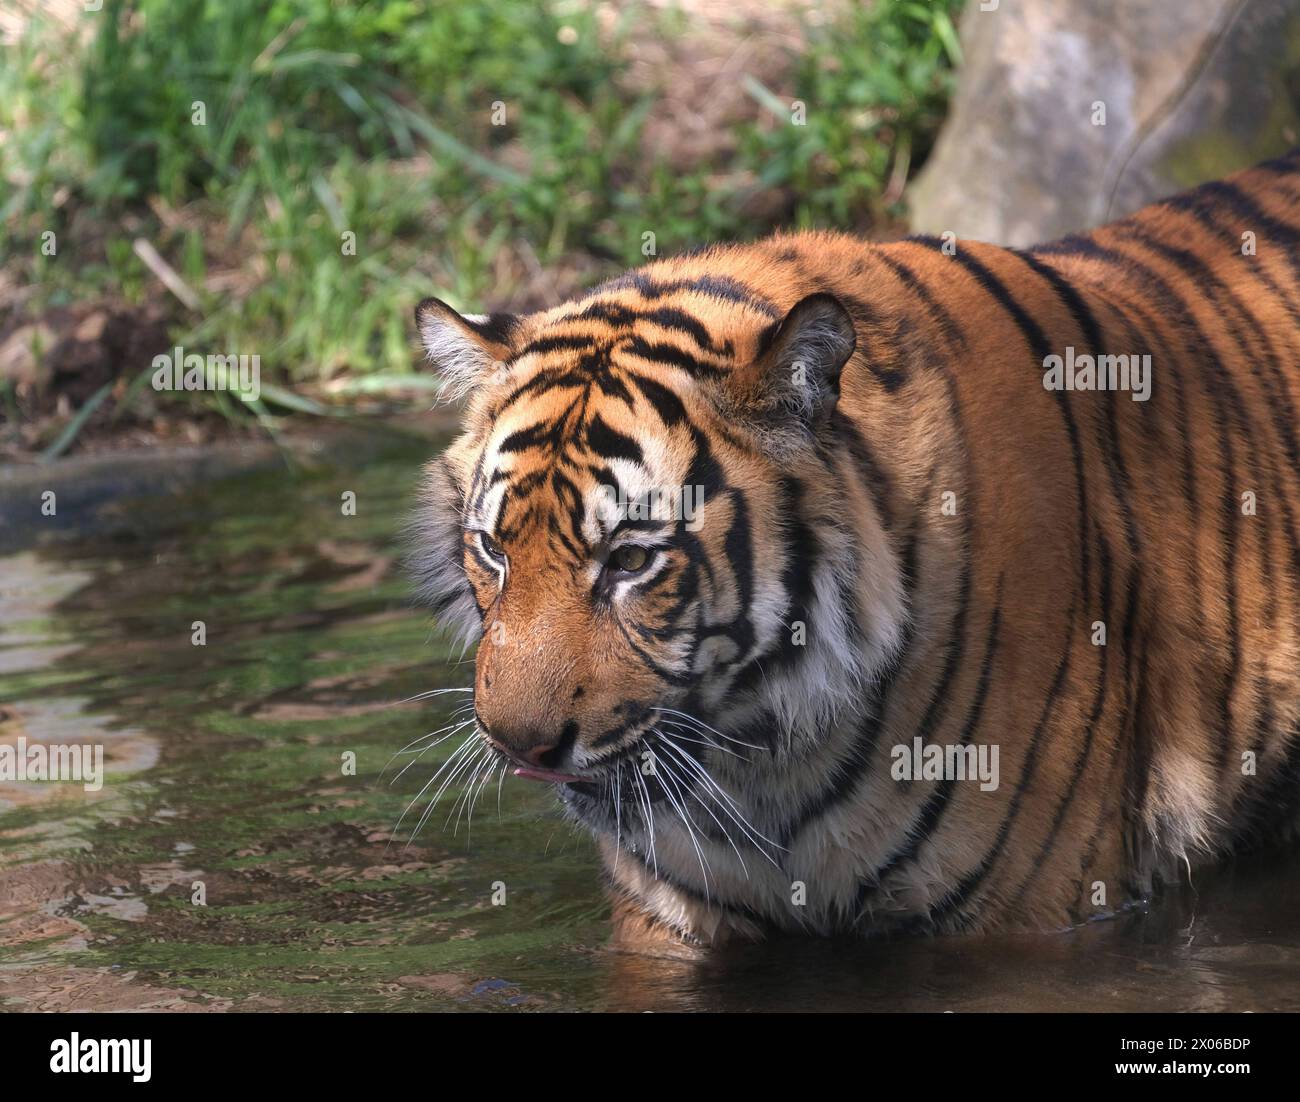 Sumatra-Tiger im Zoo Krefeld in verschiedenen Aktionen. Tigre *** tigres de Sumatra au zoo de Krefeld dans diverses activités de tigre Banque D'Images